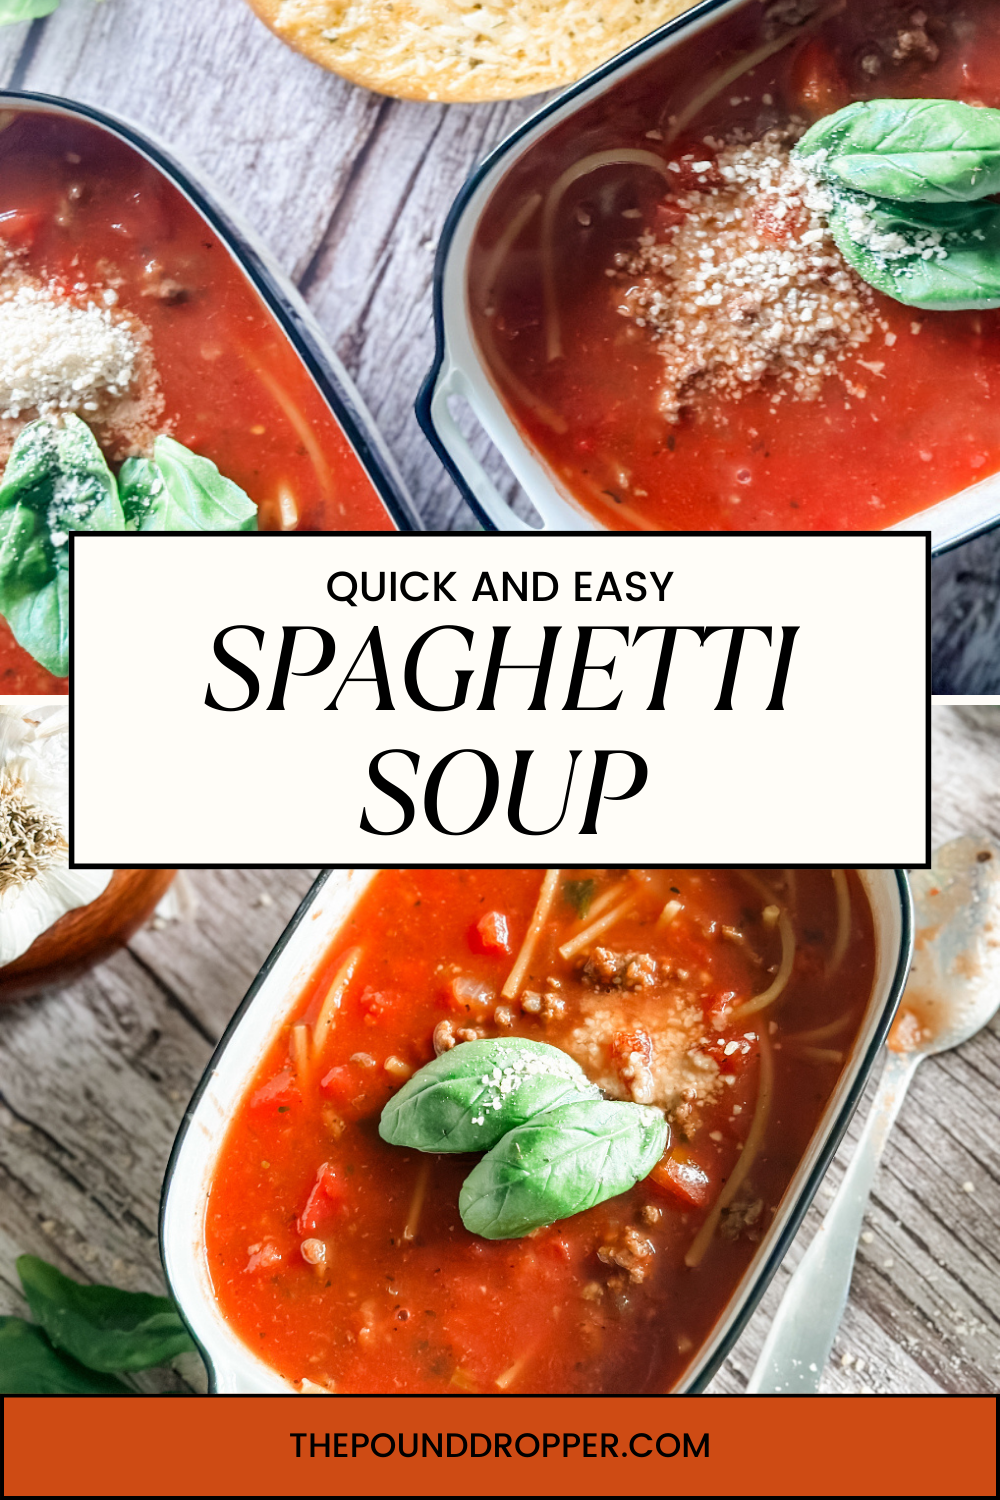 Skinny Spaghetti Soup via @pounddropper